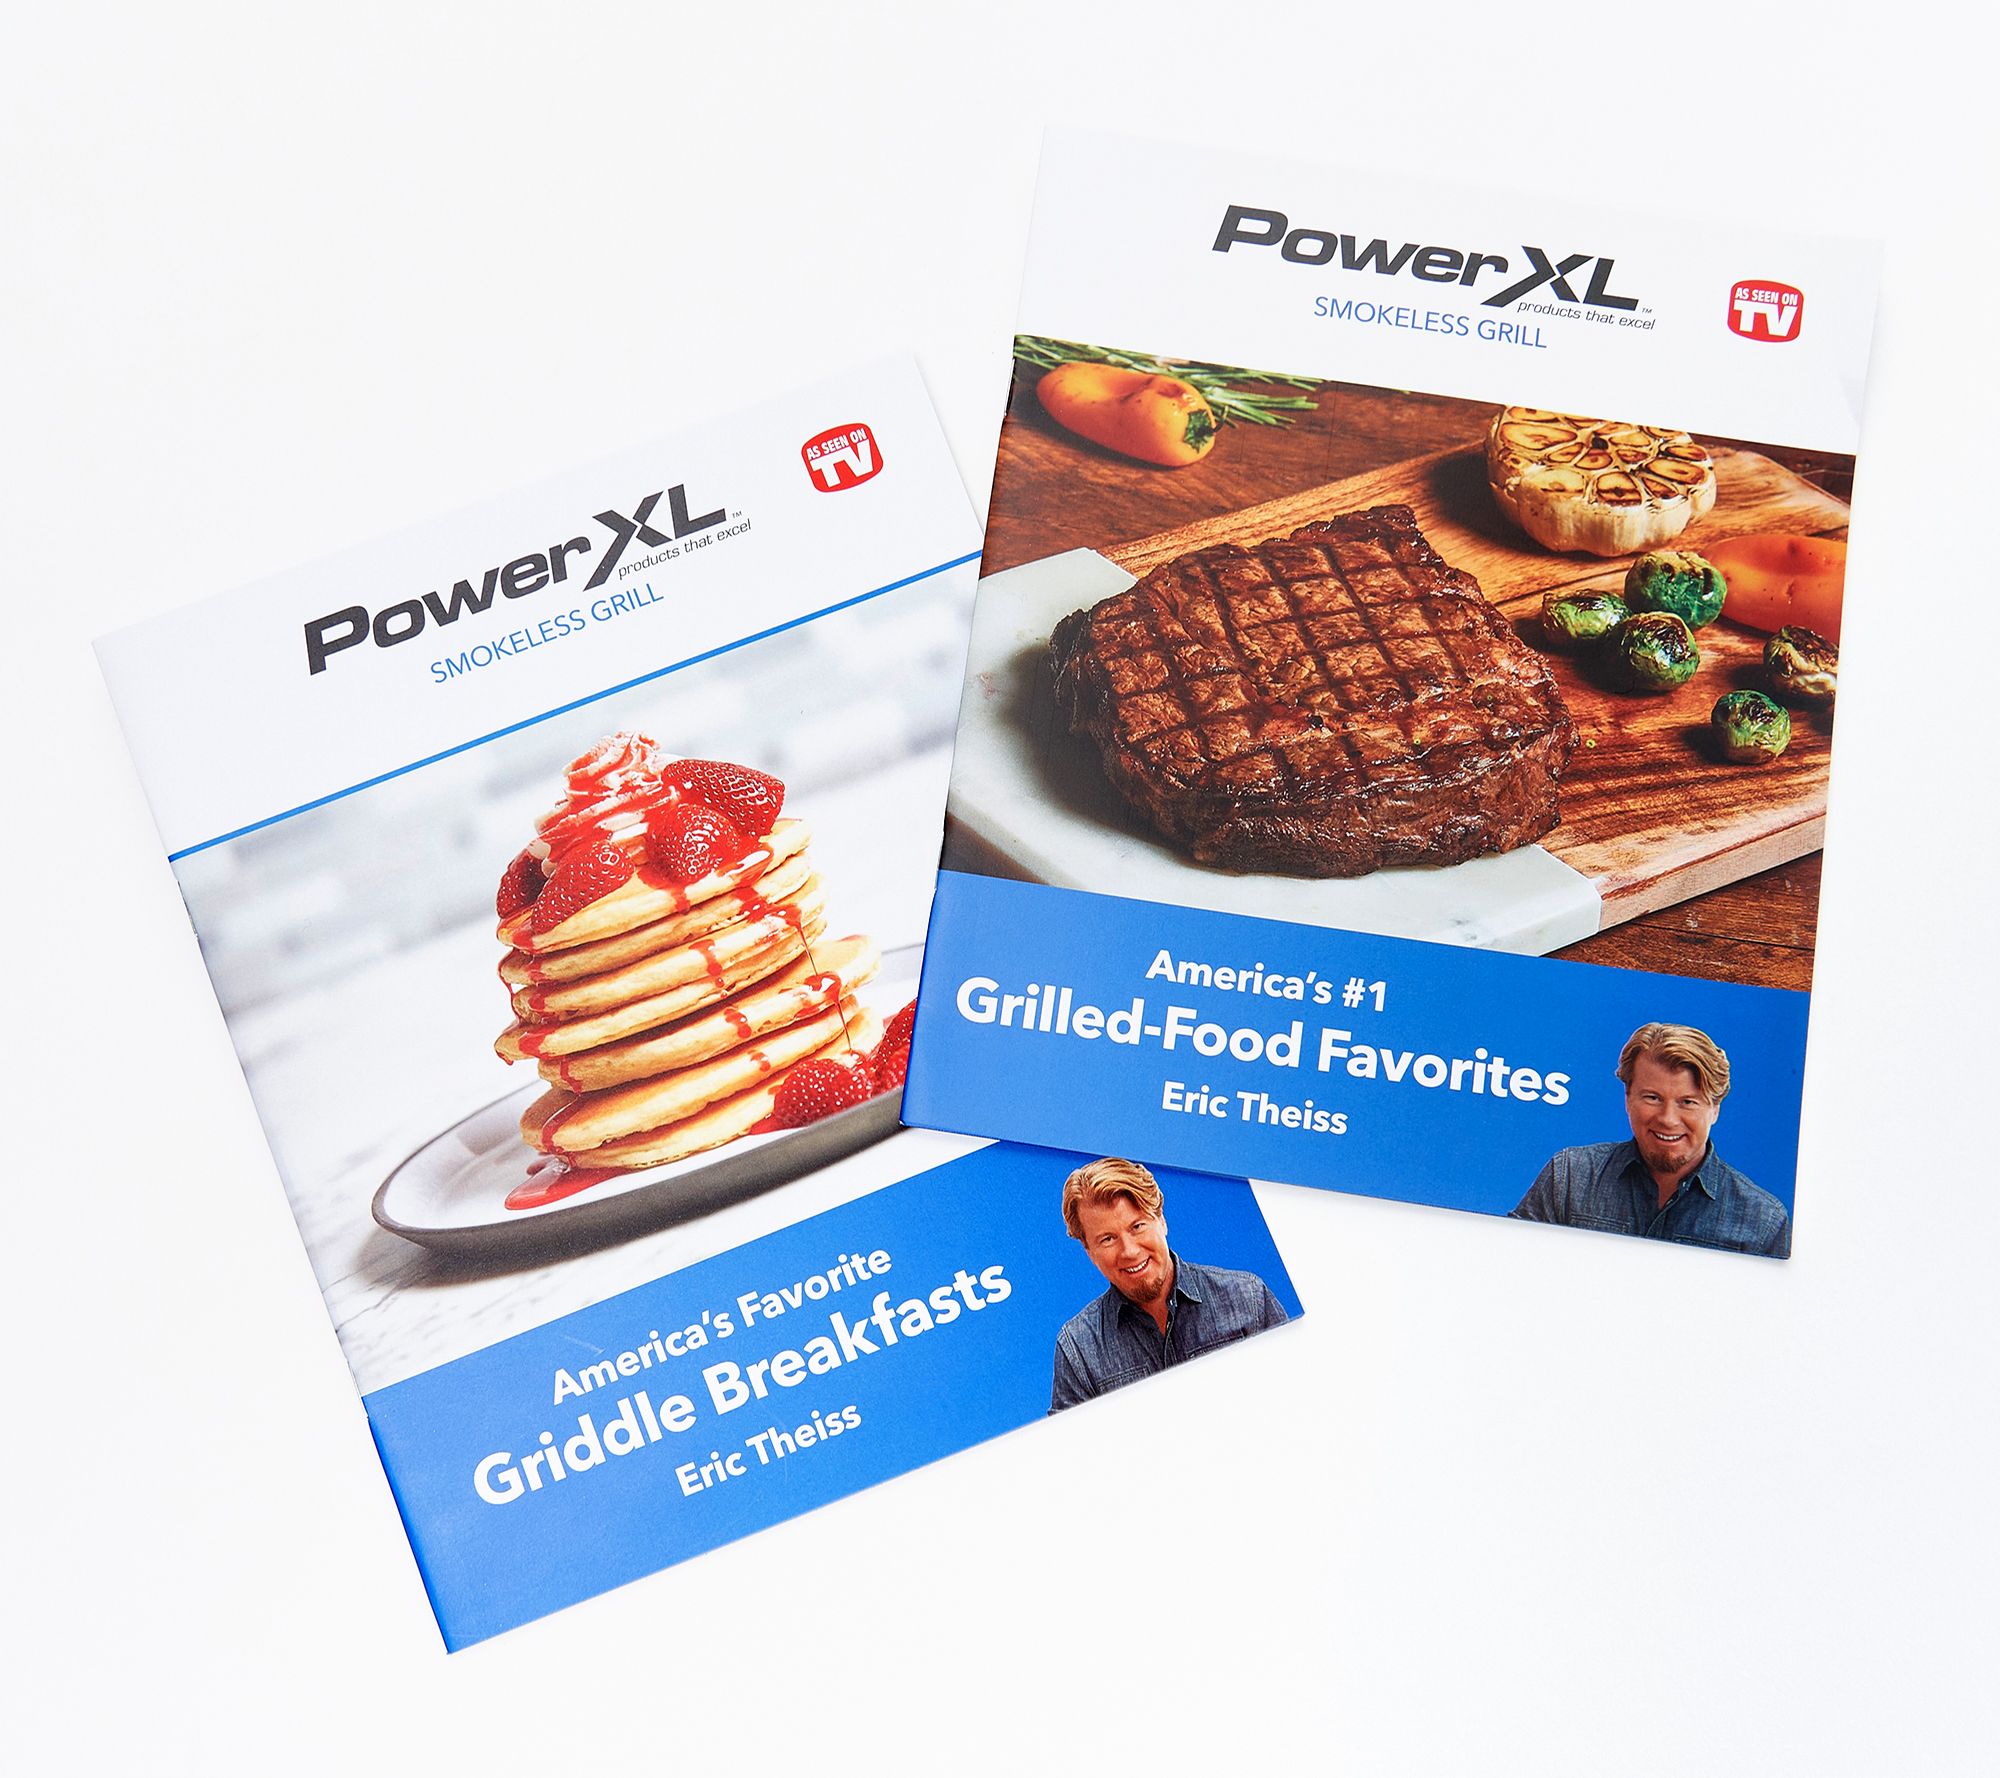 PowerXL Smokeless Grill Pro Countertop Indoor Electric Grill Silver PXLSG -  Best Buy